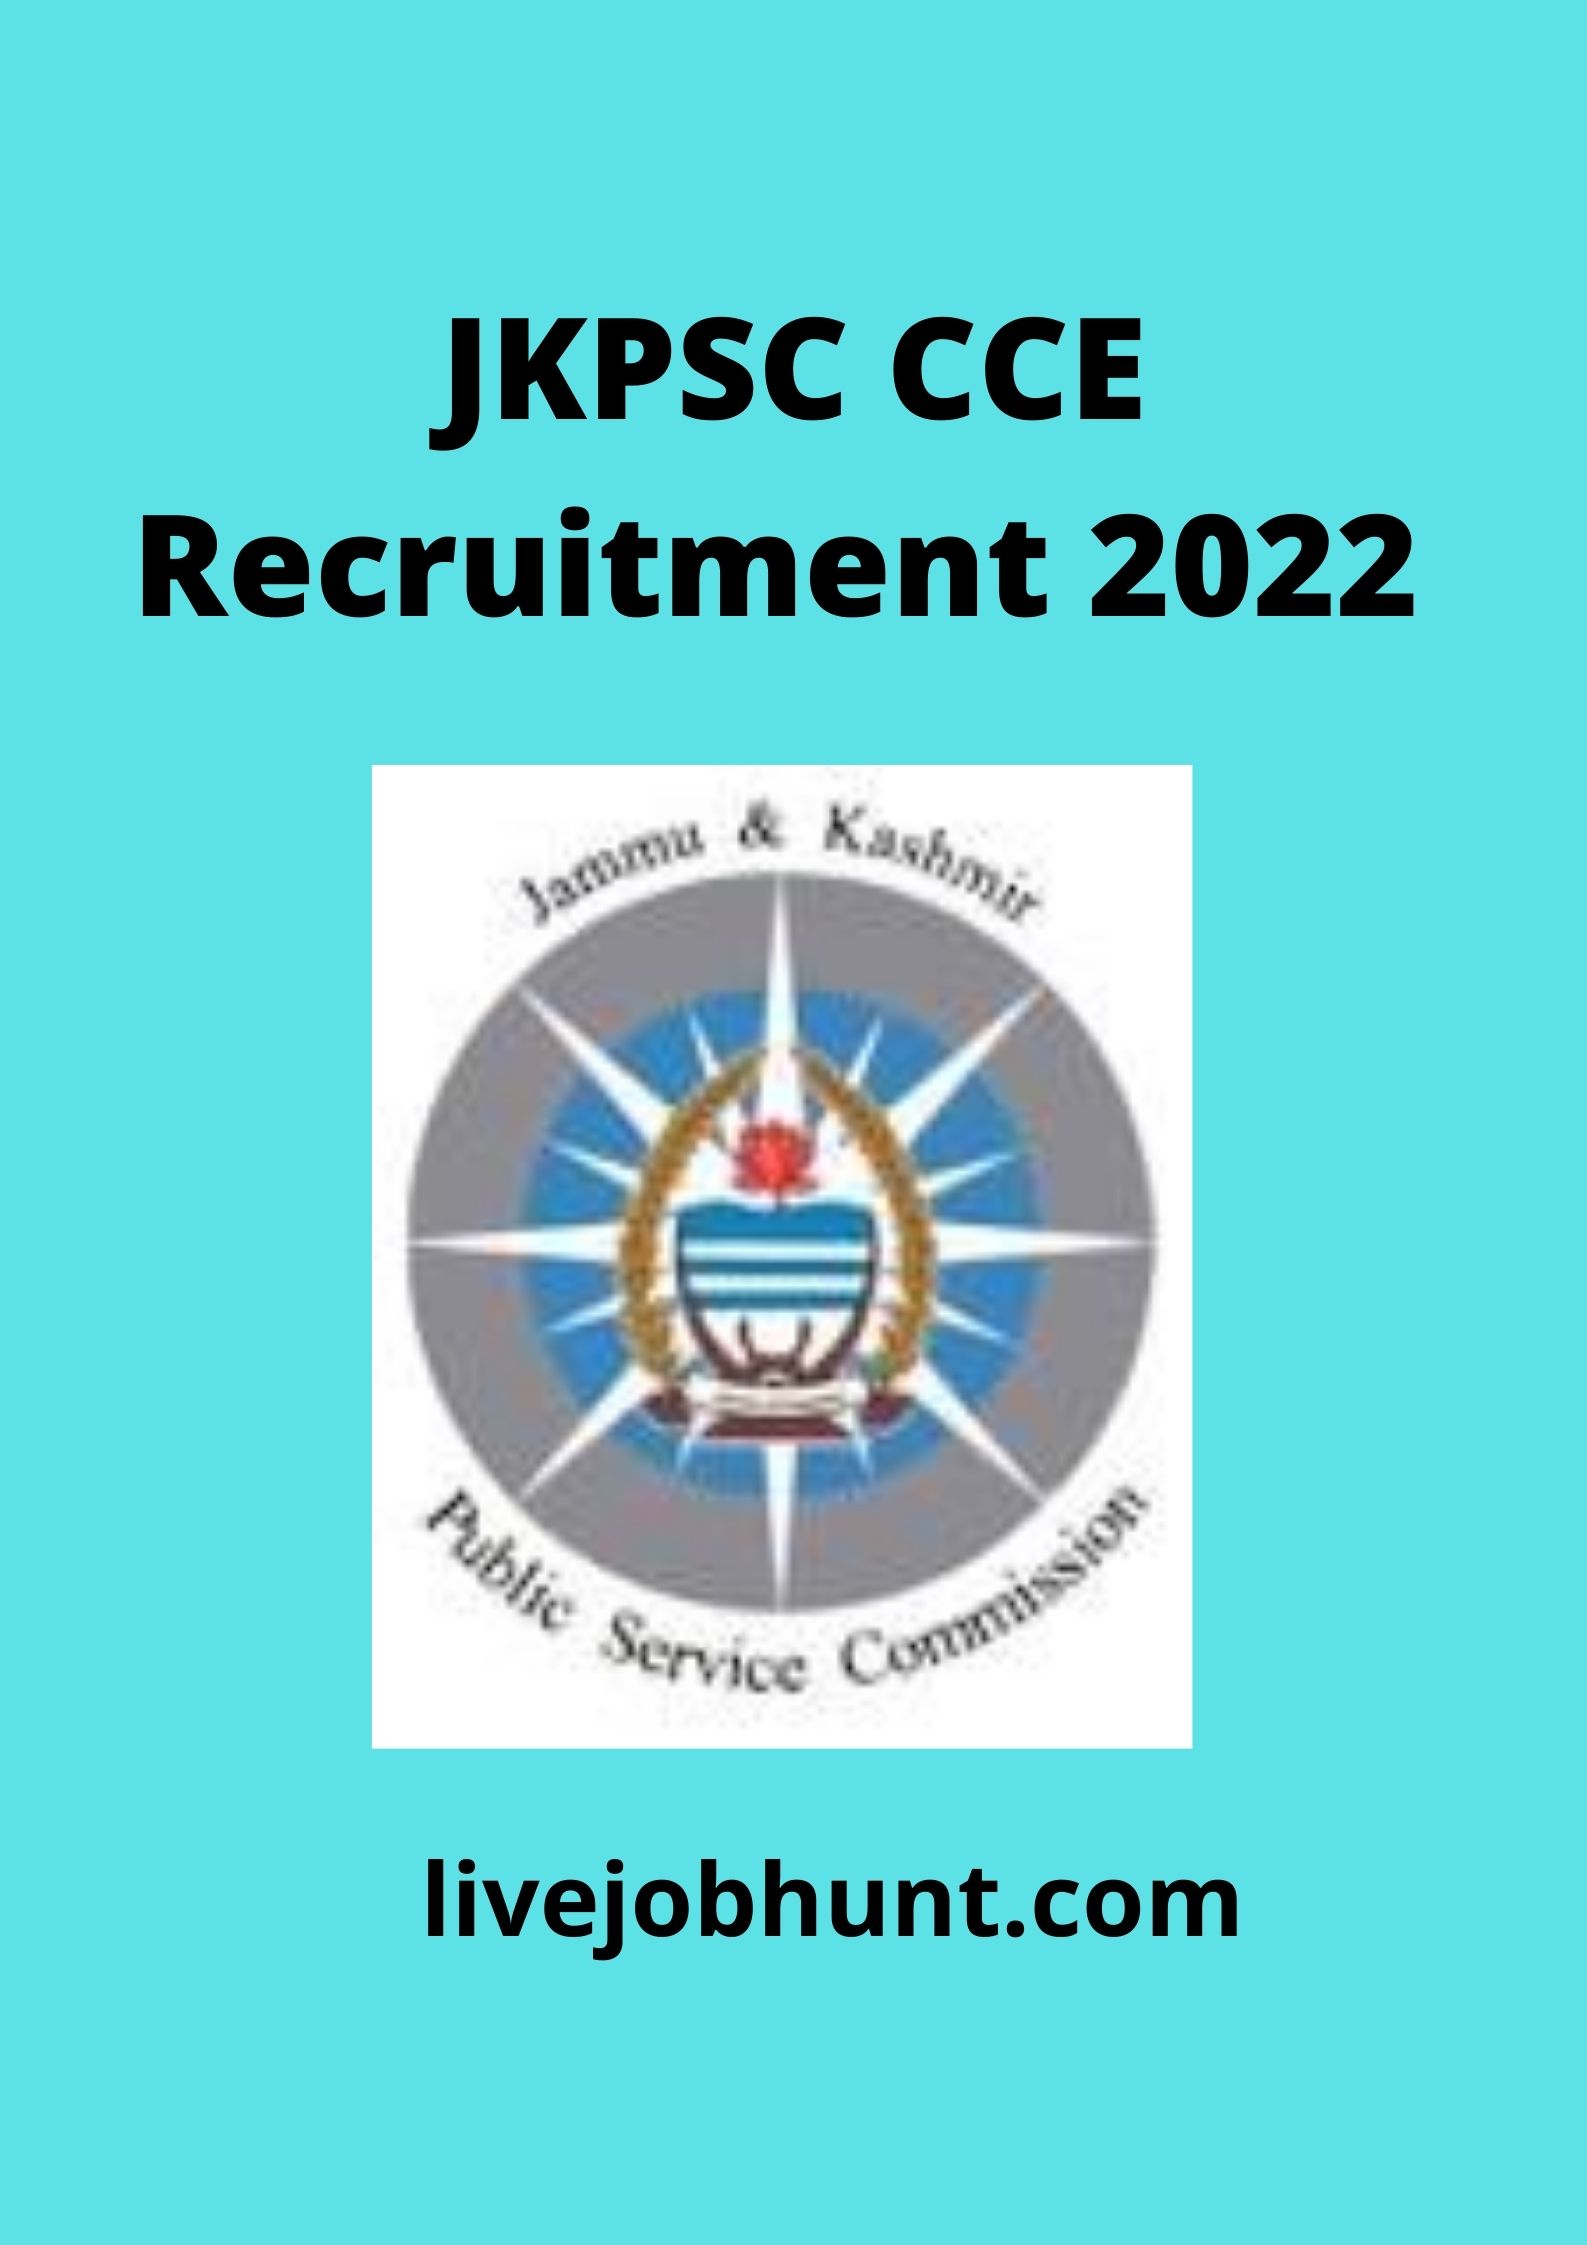 JKPSC CCE Recruitment 2022